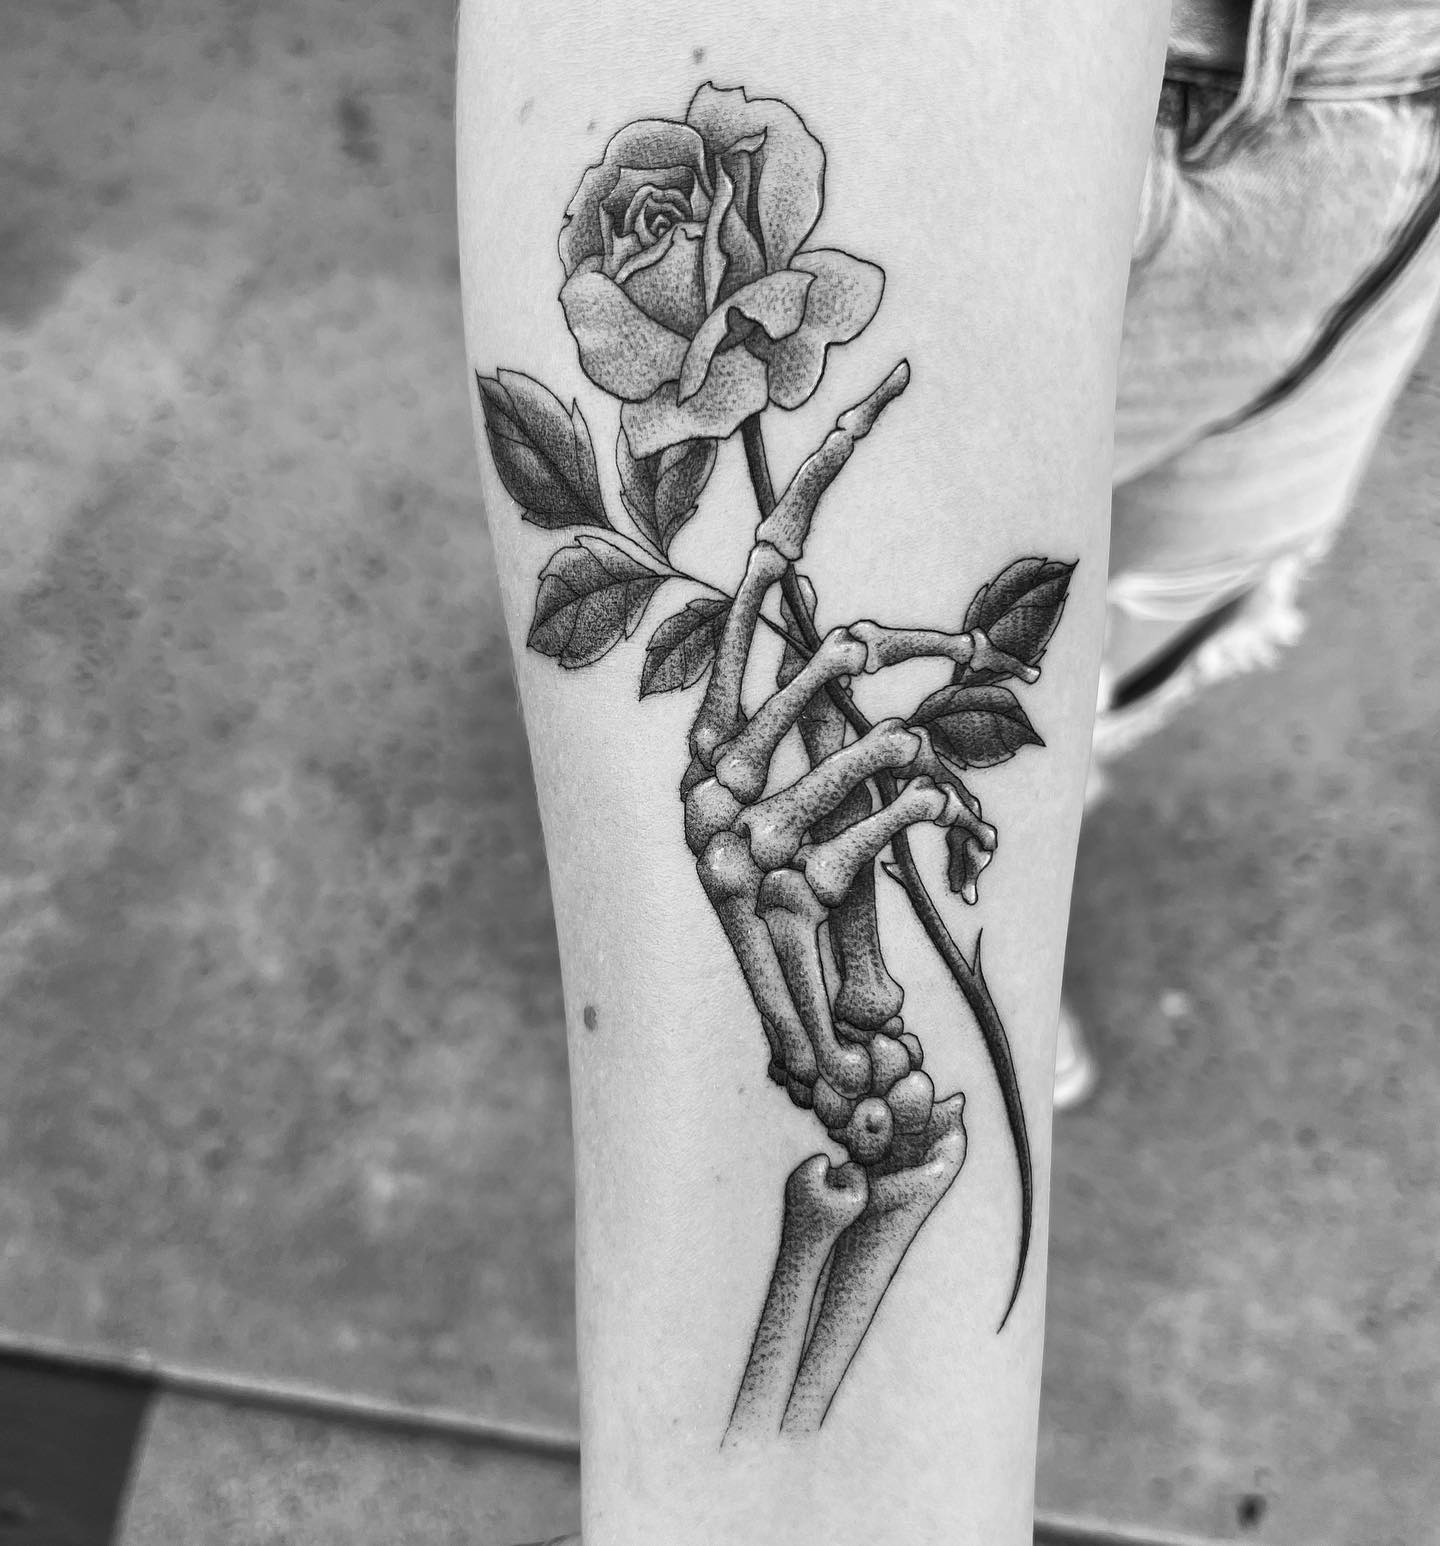 skeleton hand holding tattoo